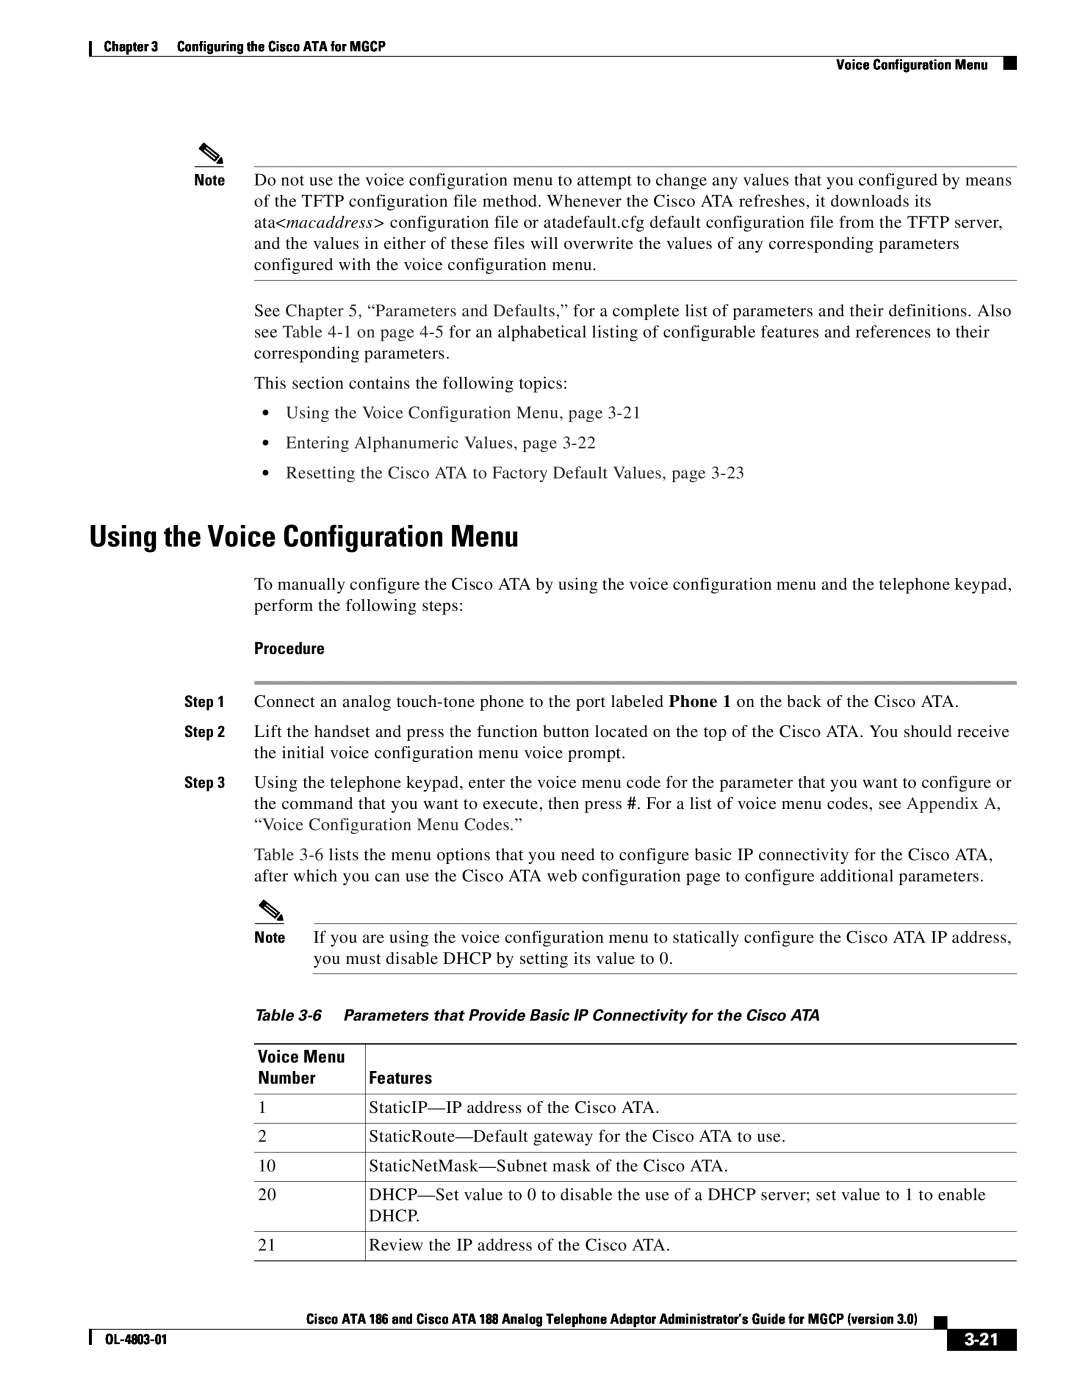 Cisco Systems ATA 188 Using the Voice Configuration Menu, page, Entering Alphanumeric Values, page, Voice Menu, Number 